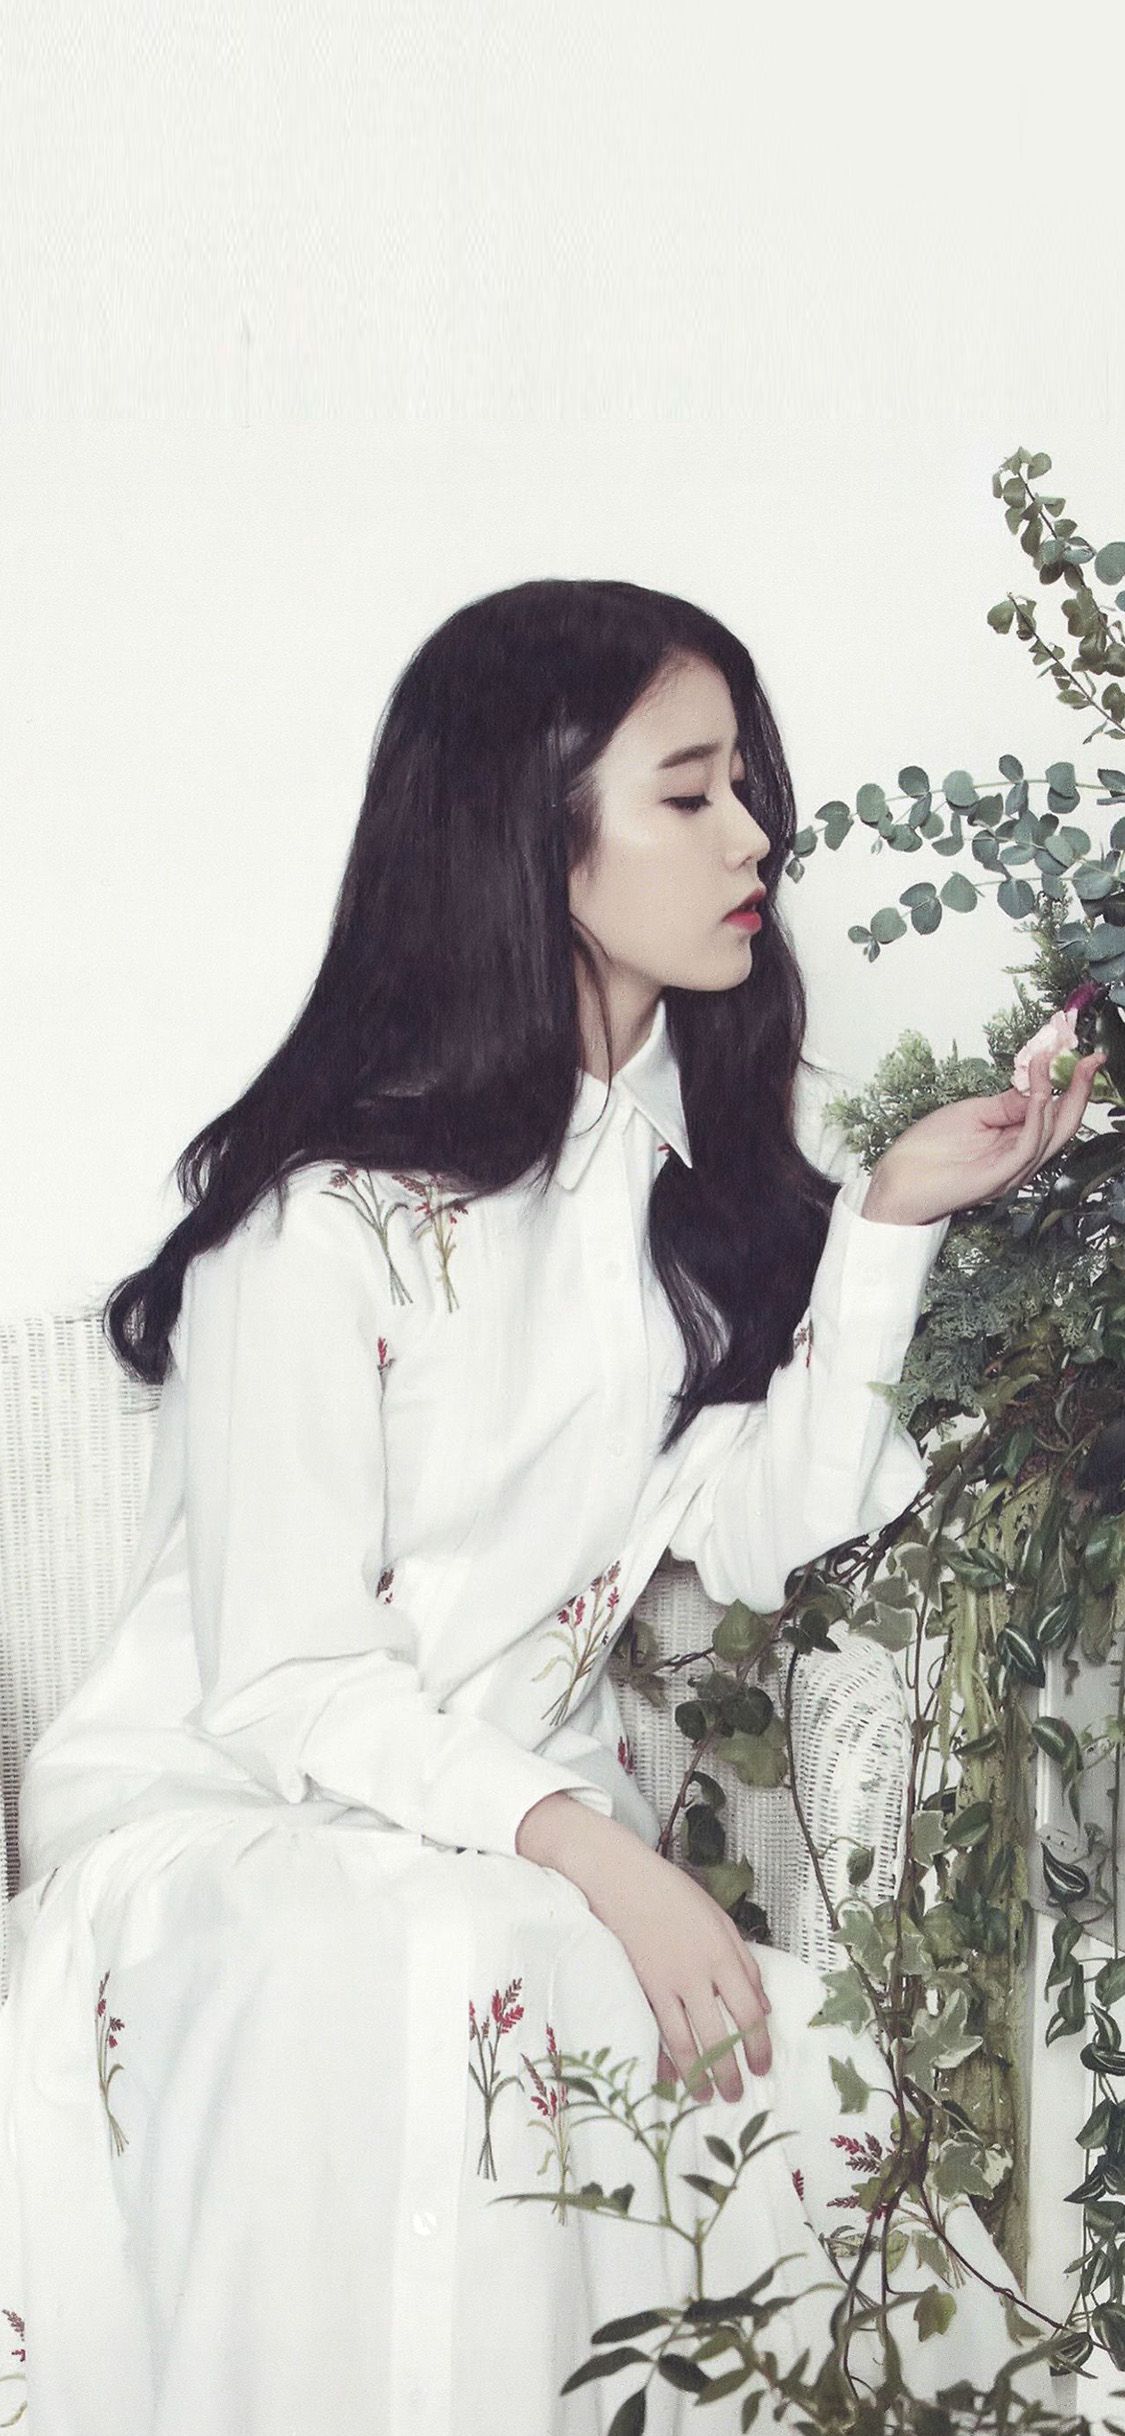 iPhoneX wallpaper: iu girl flower kpop cute white. Girl